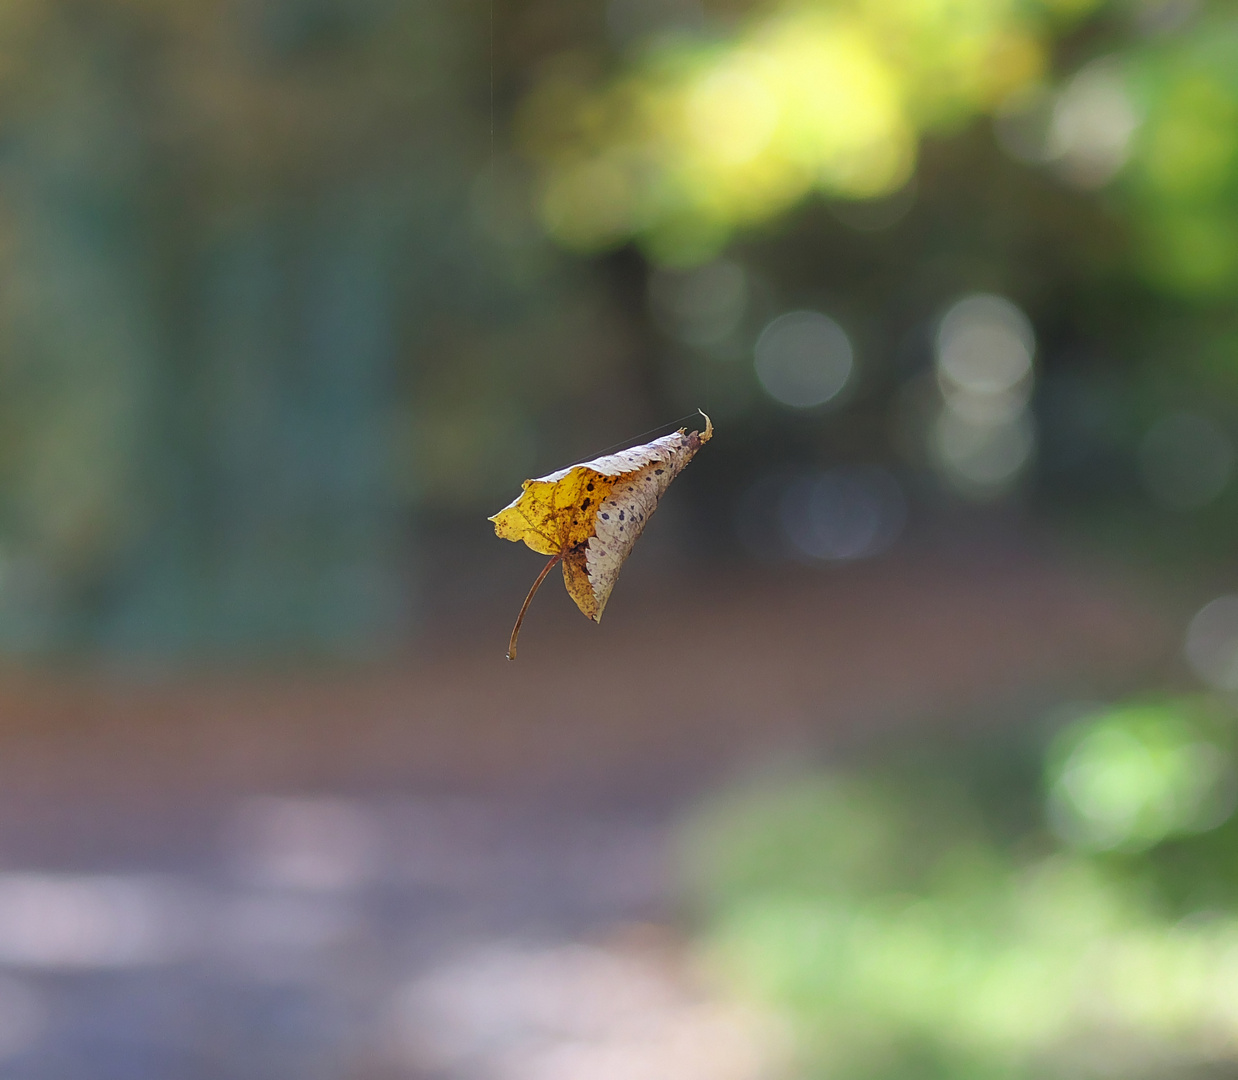 Herbstblatt am seidenen Faden (Spinnenfaden)